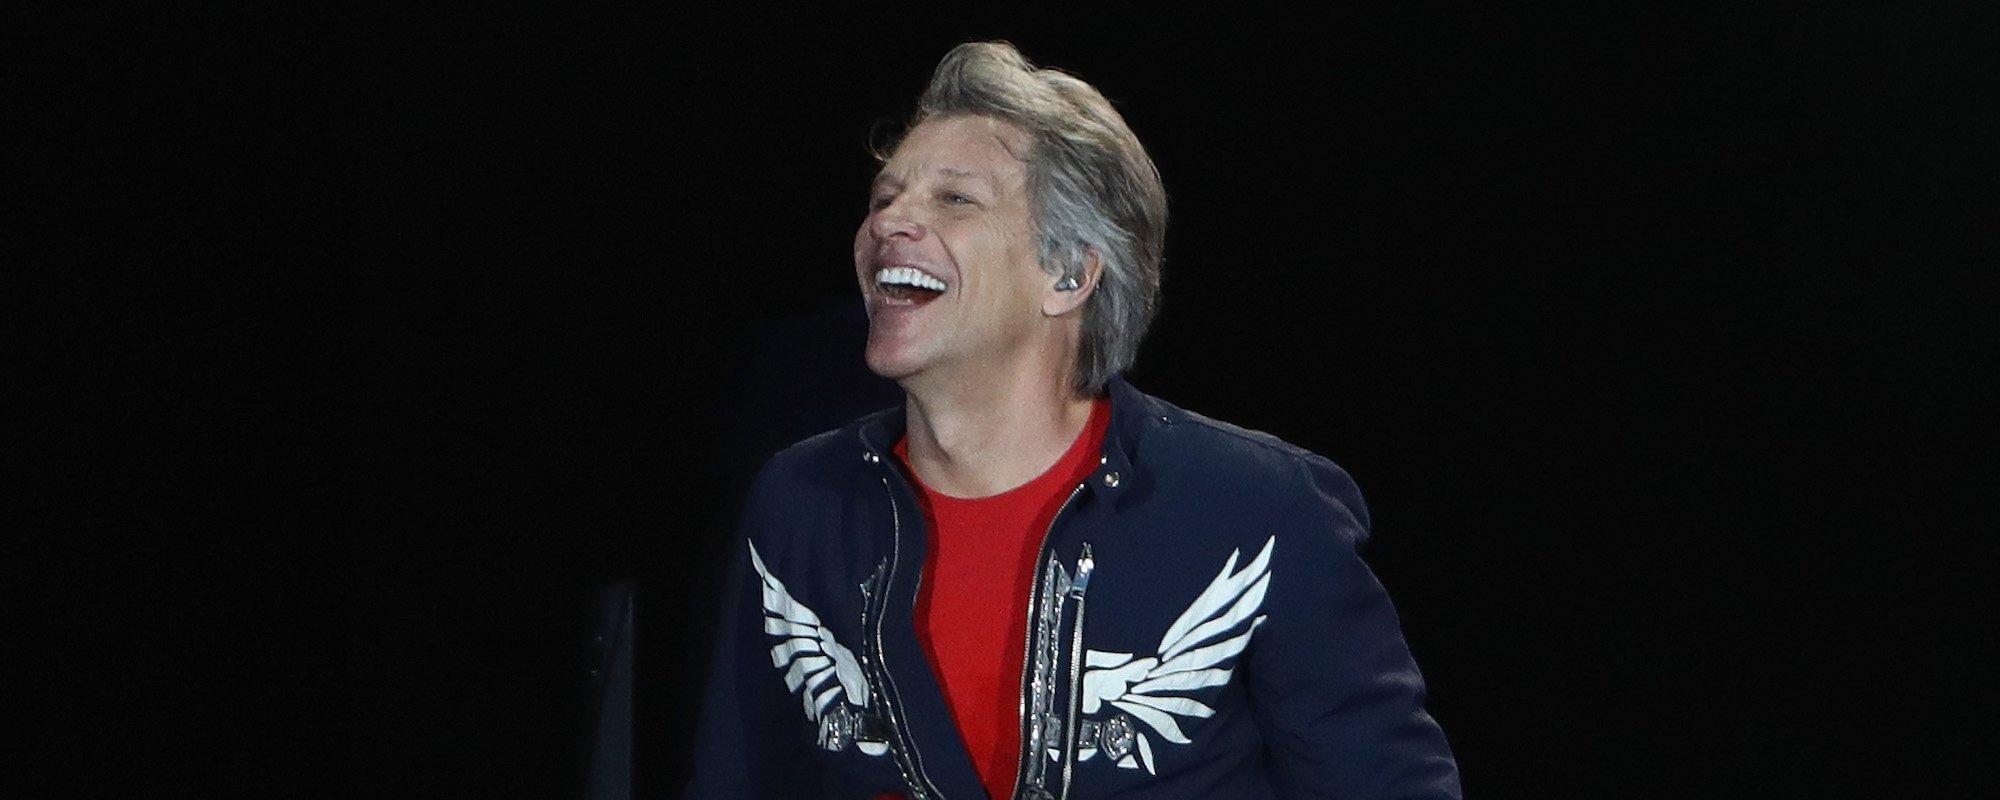 Listen: Bon Jovi Hits Closer to Home with New Holiday Song “Christmas Isn’t Christmas”